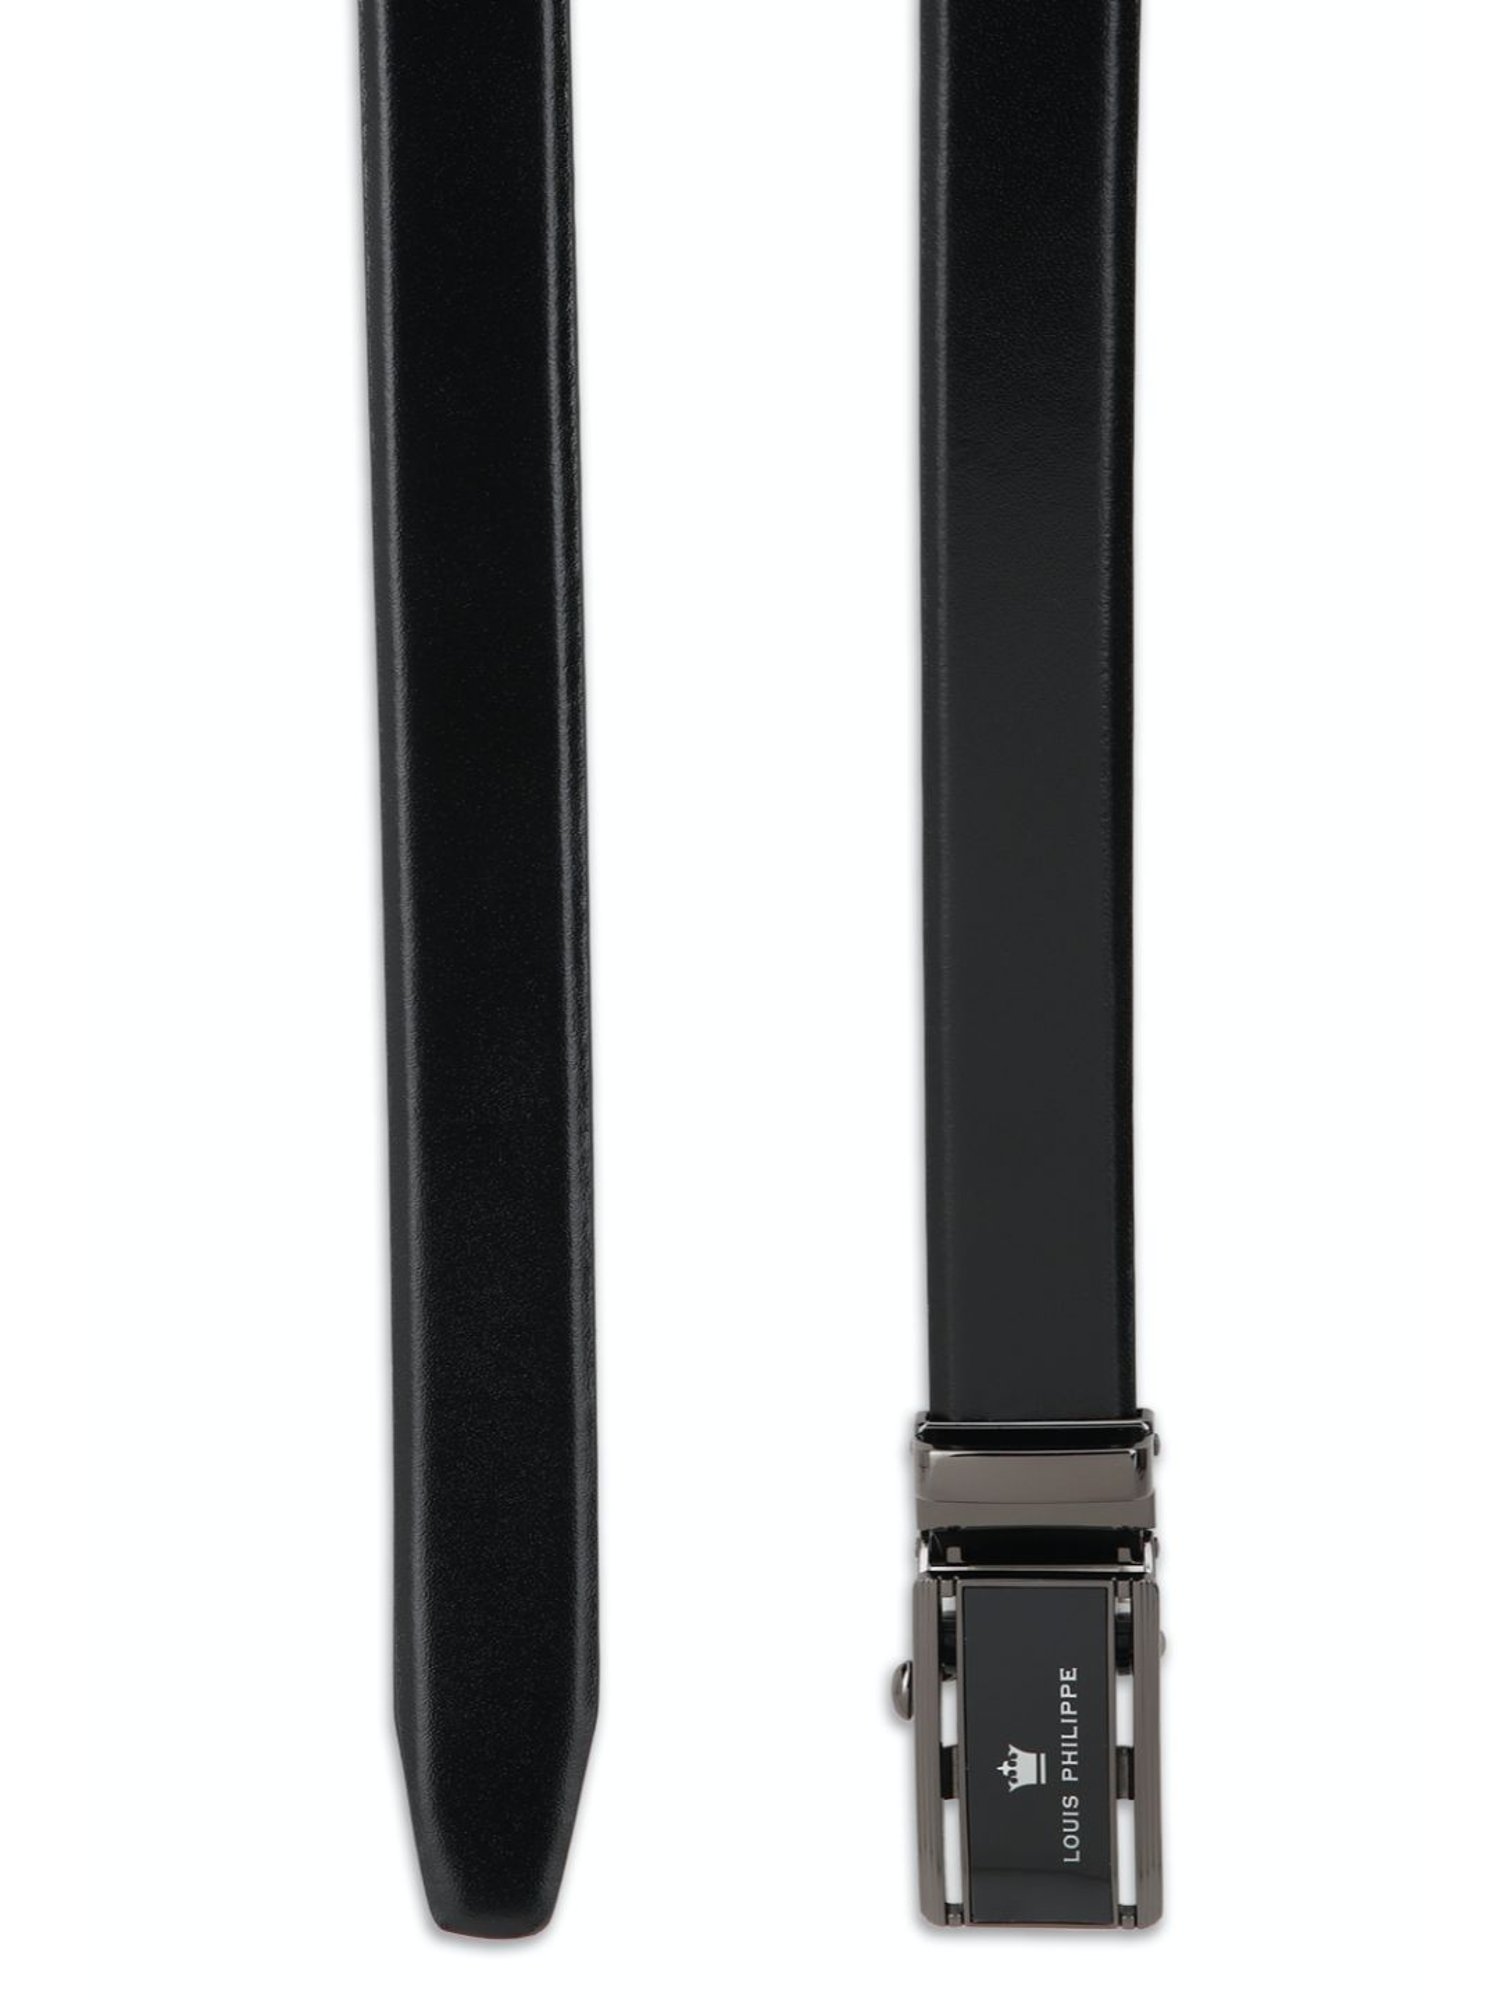 Buy Louis Philippe Black Leather Formal Belt forMen at Best Price @ Tata  CLiQ